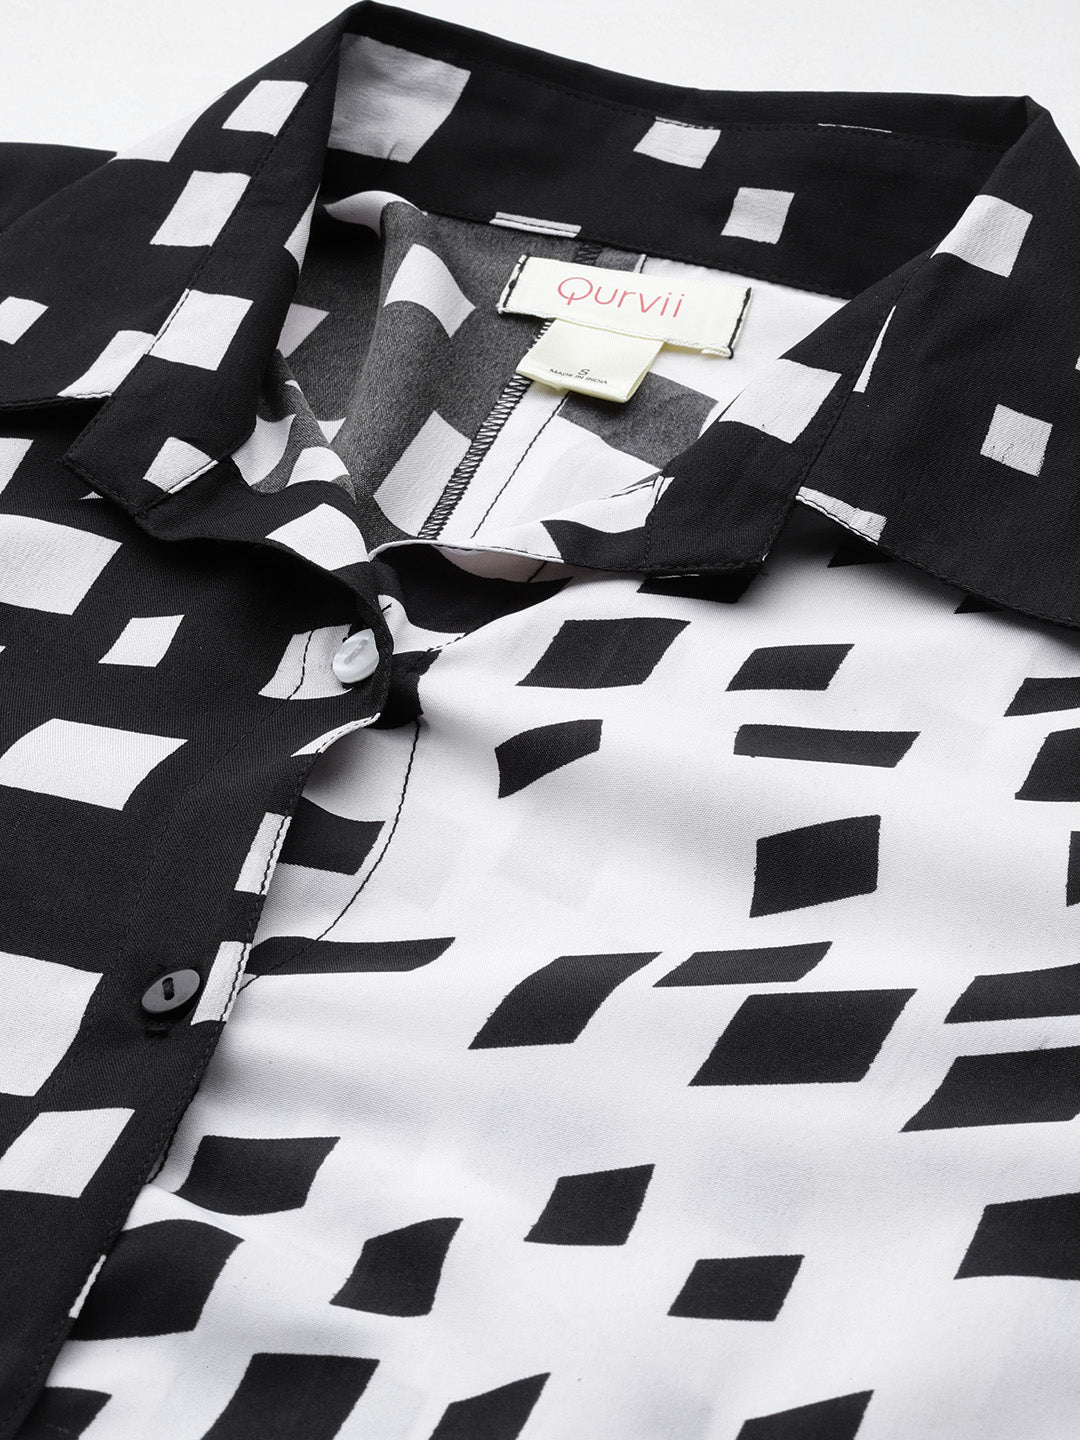 Black & white Geometric Print Shirt.